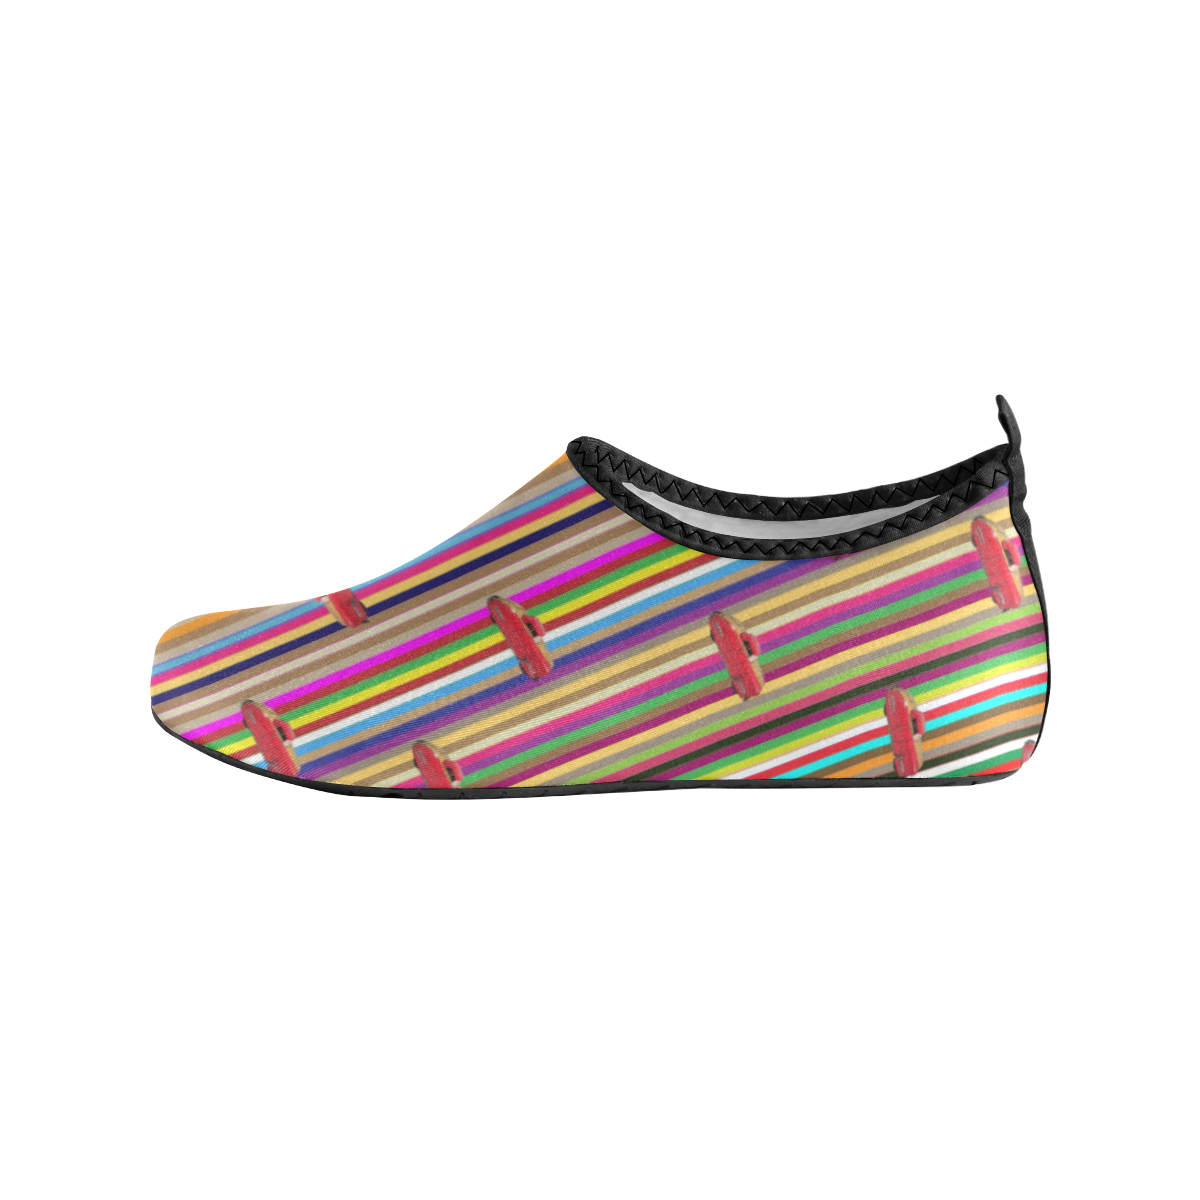 Stripes n Cars Kids' Slip-On Water Shoes (Model 056)